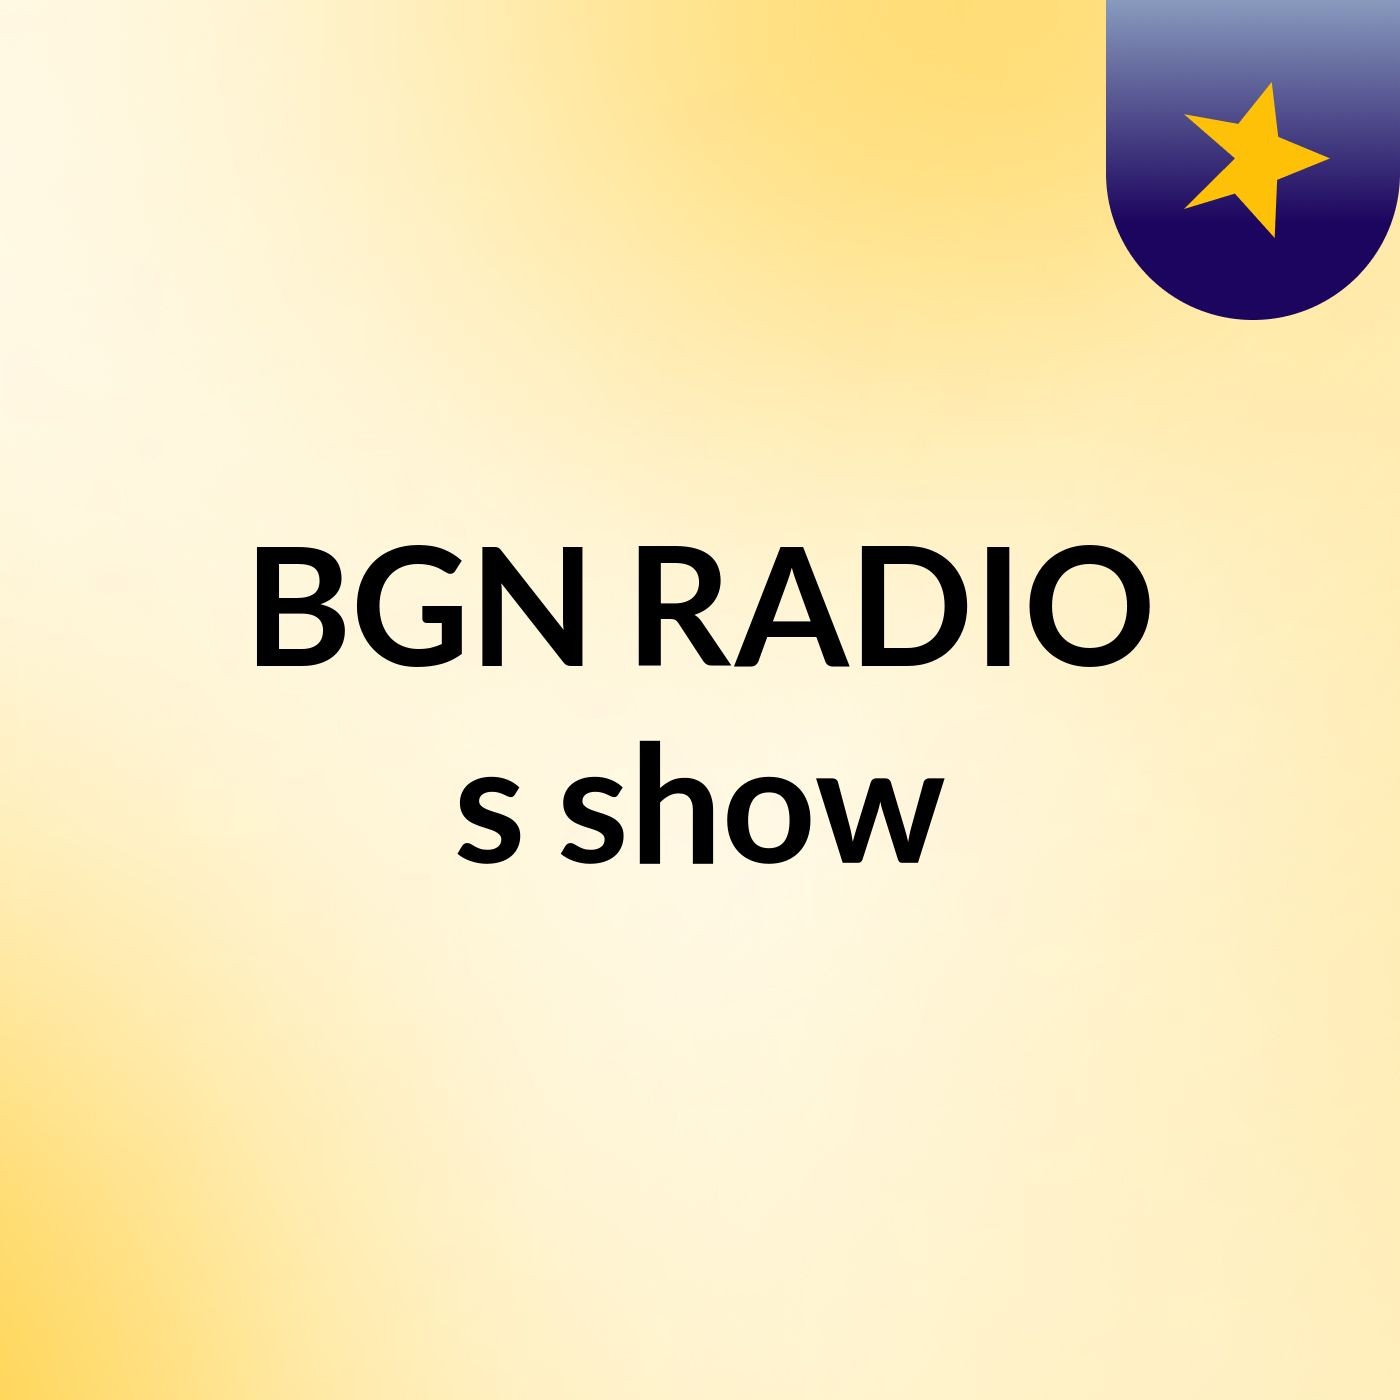 BGN RADIO's show